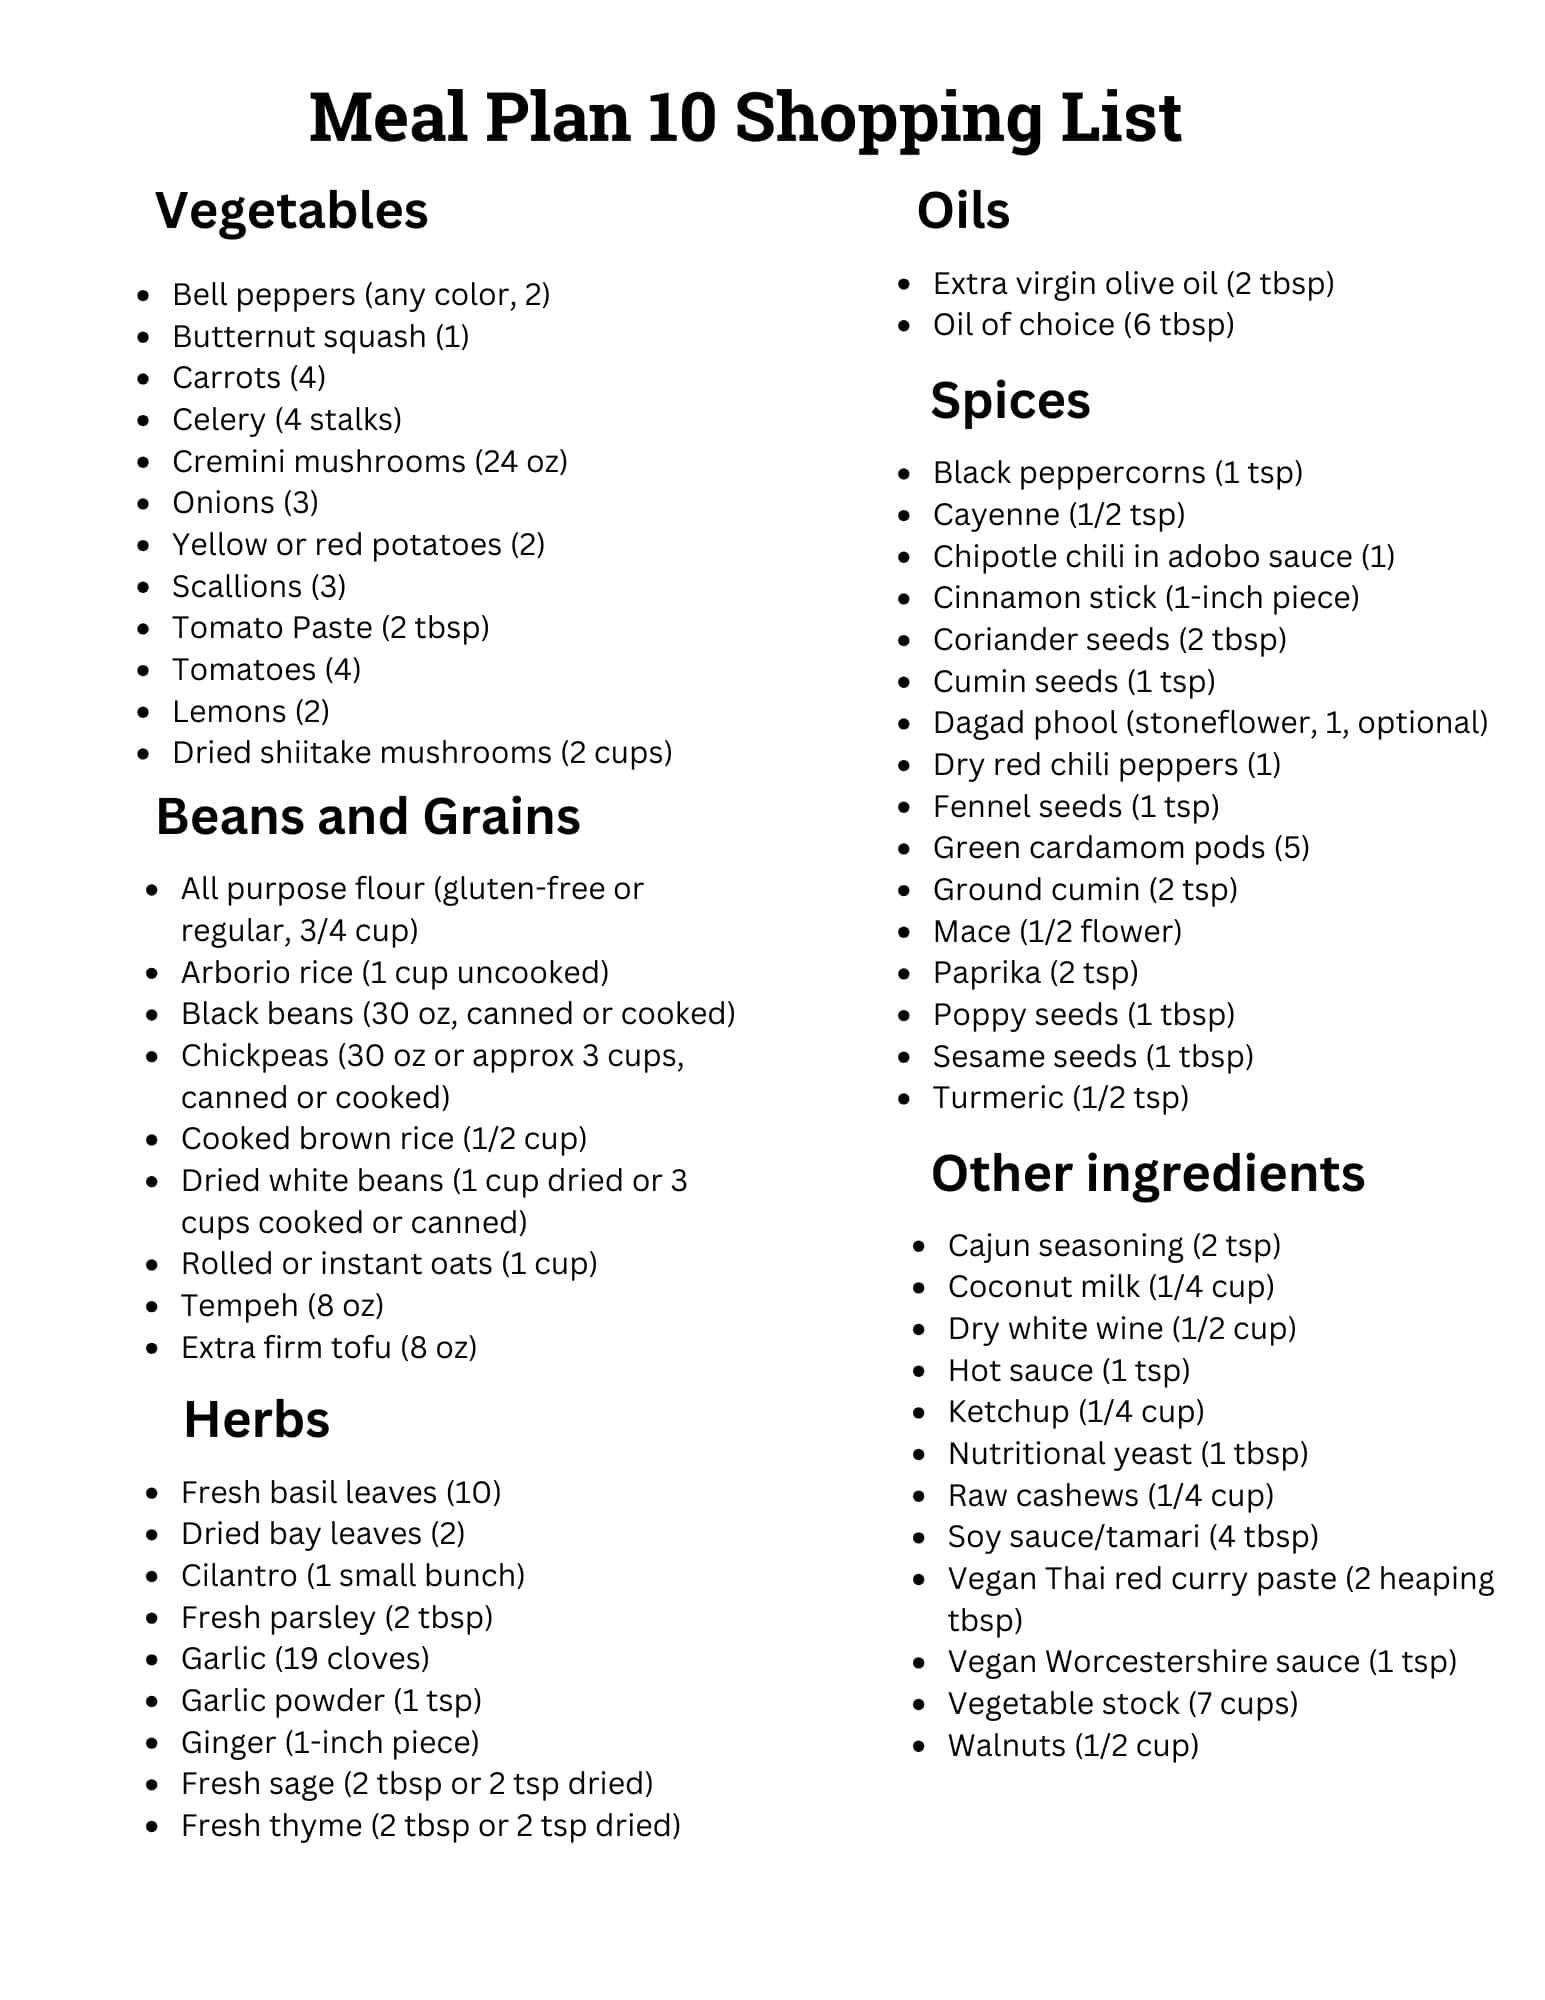 Image of shopping list for vegan meal plan 10.